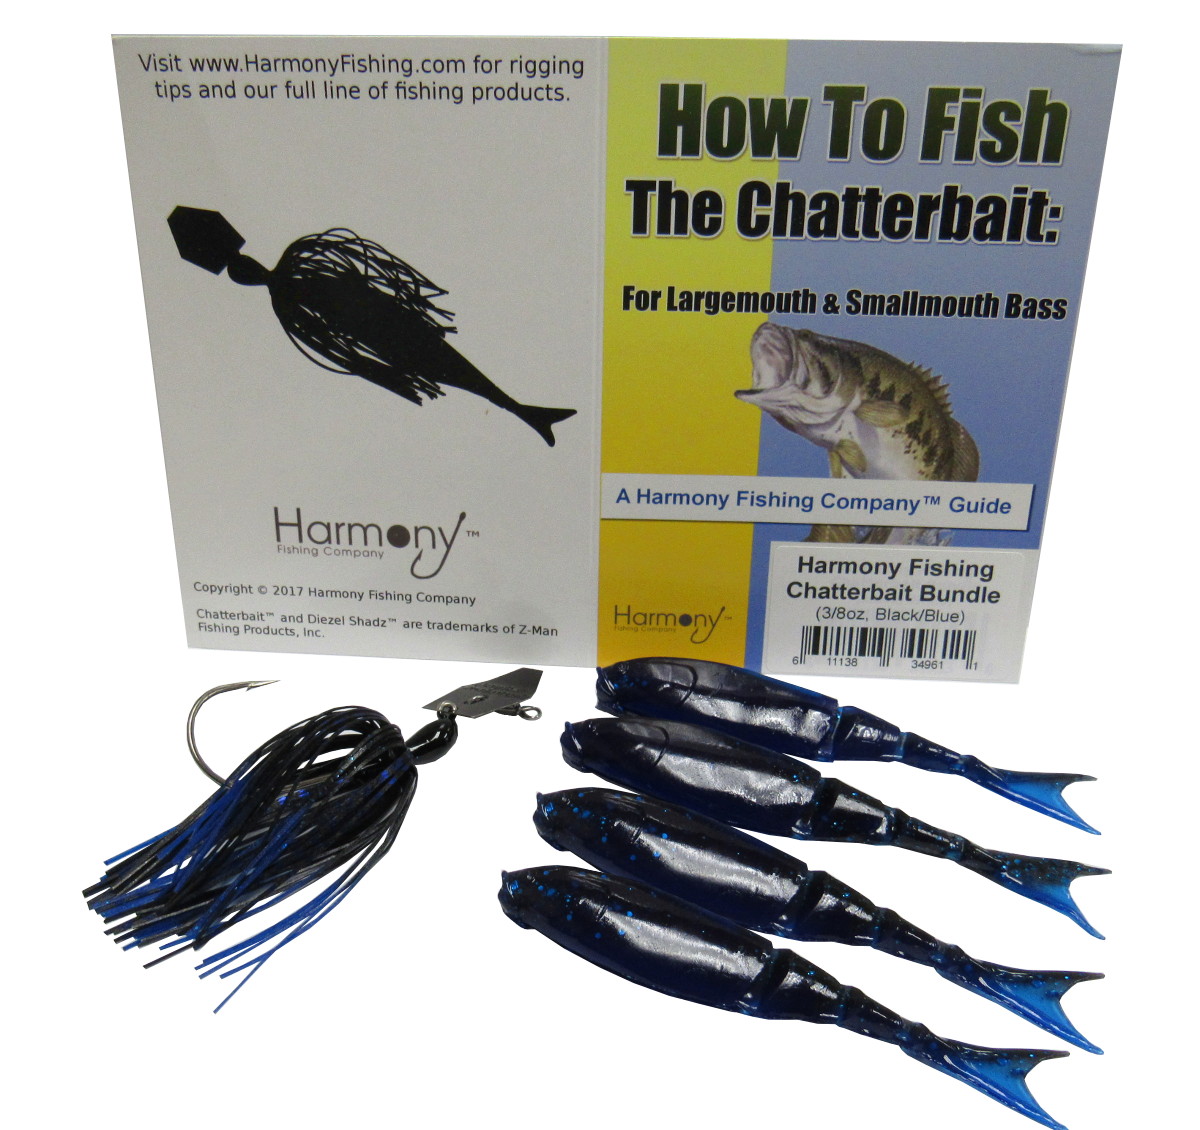 Chatterbait Kit from Harmony Fishing Company